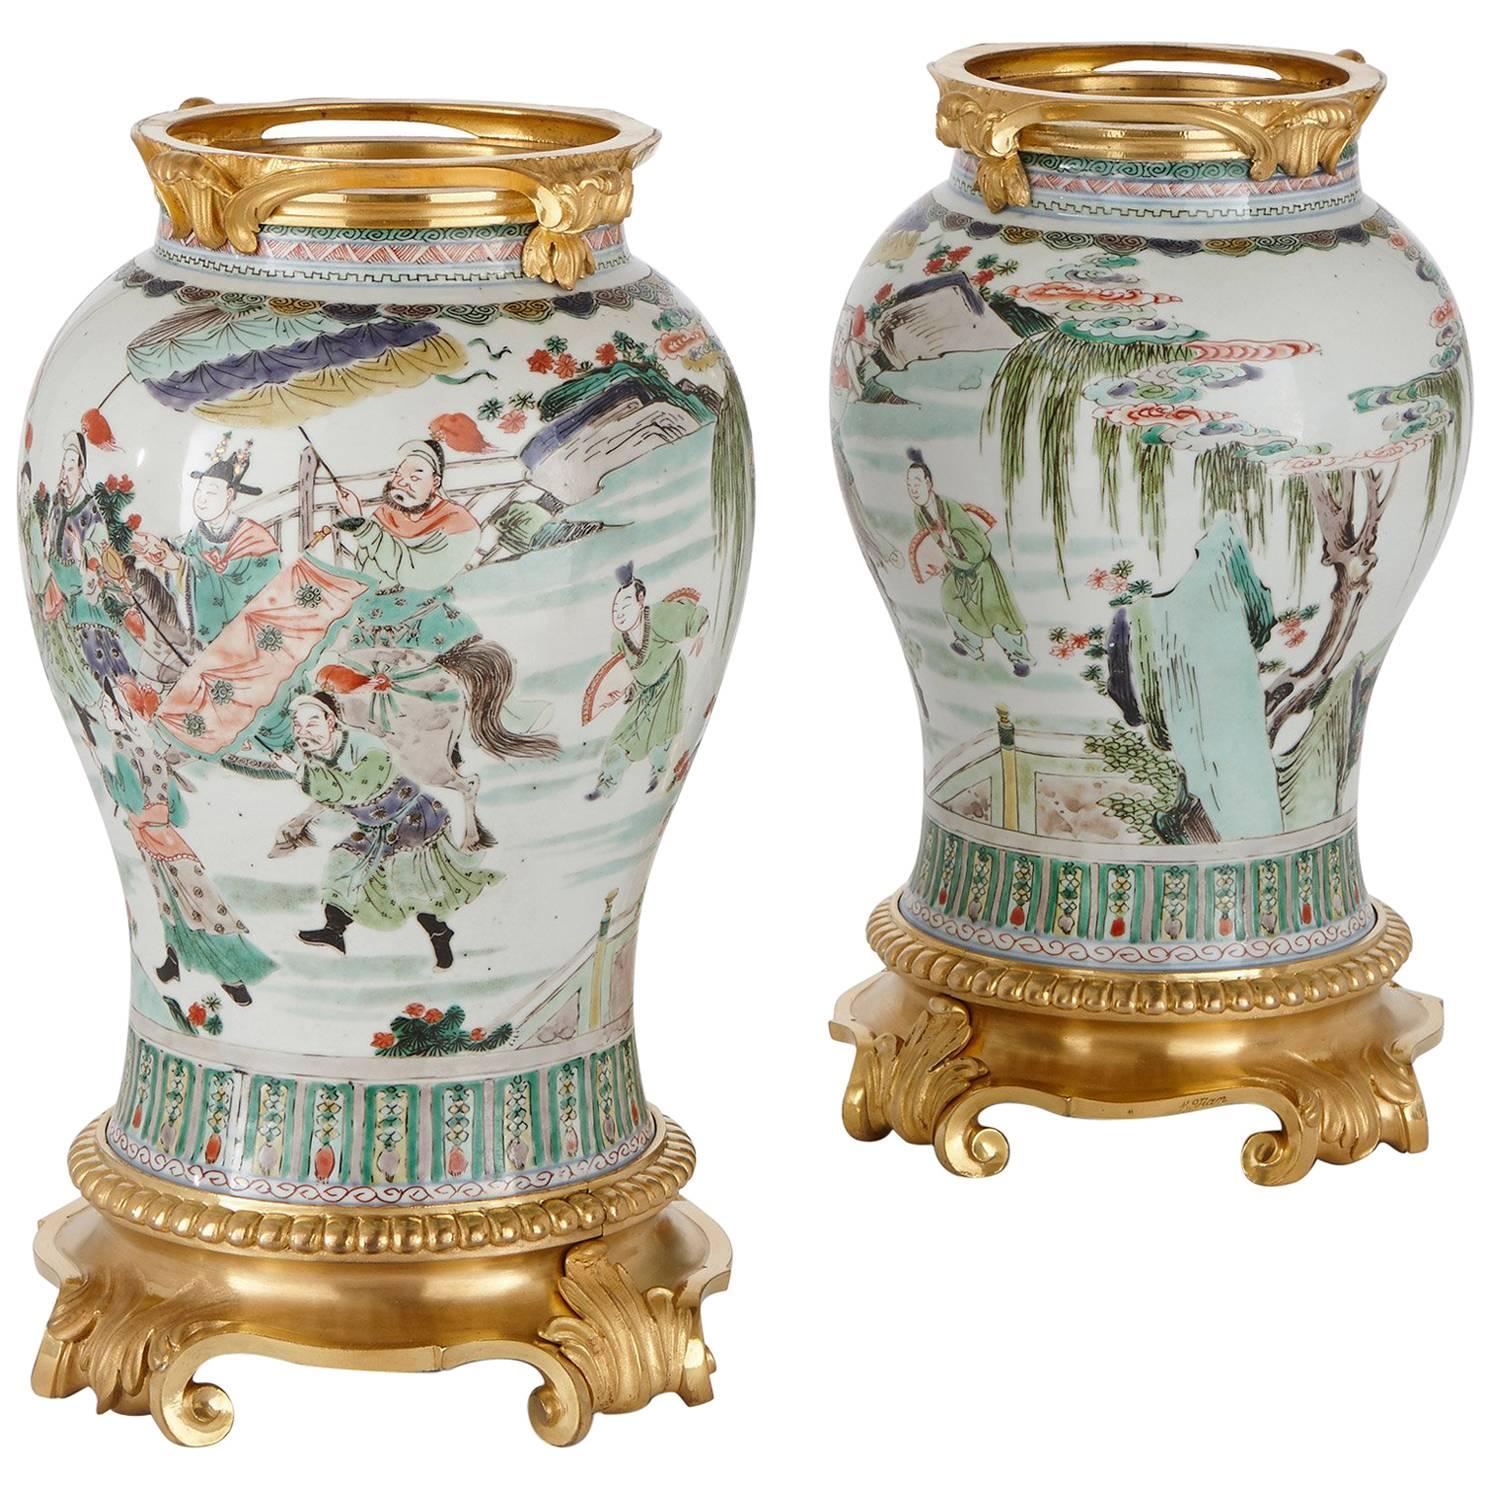 Pair of Ormolu-Mounted Chinese Famille Verte Porcelain Vases